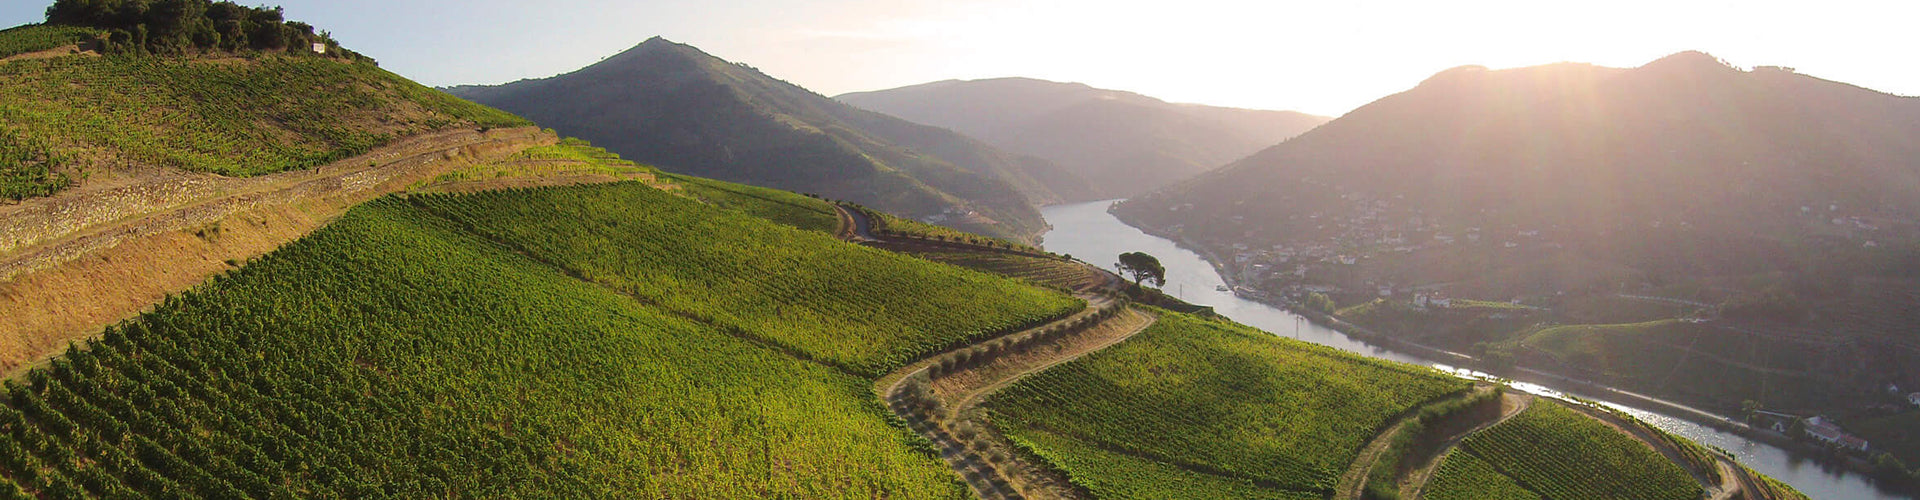 Quinta dos Murças Vineyards in the Douro Valley, Portugal